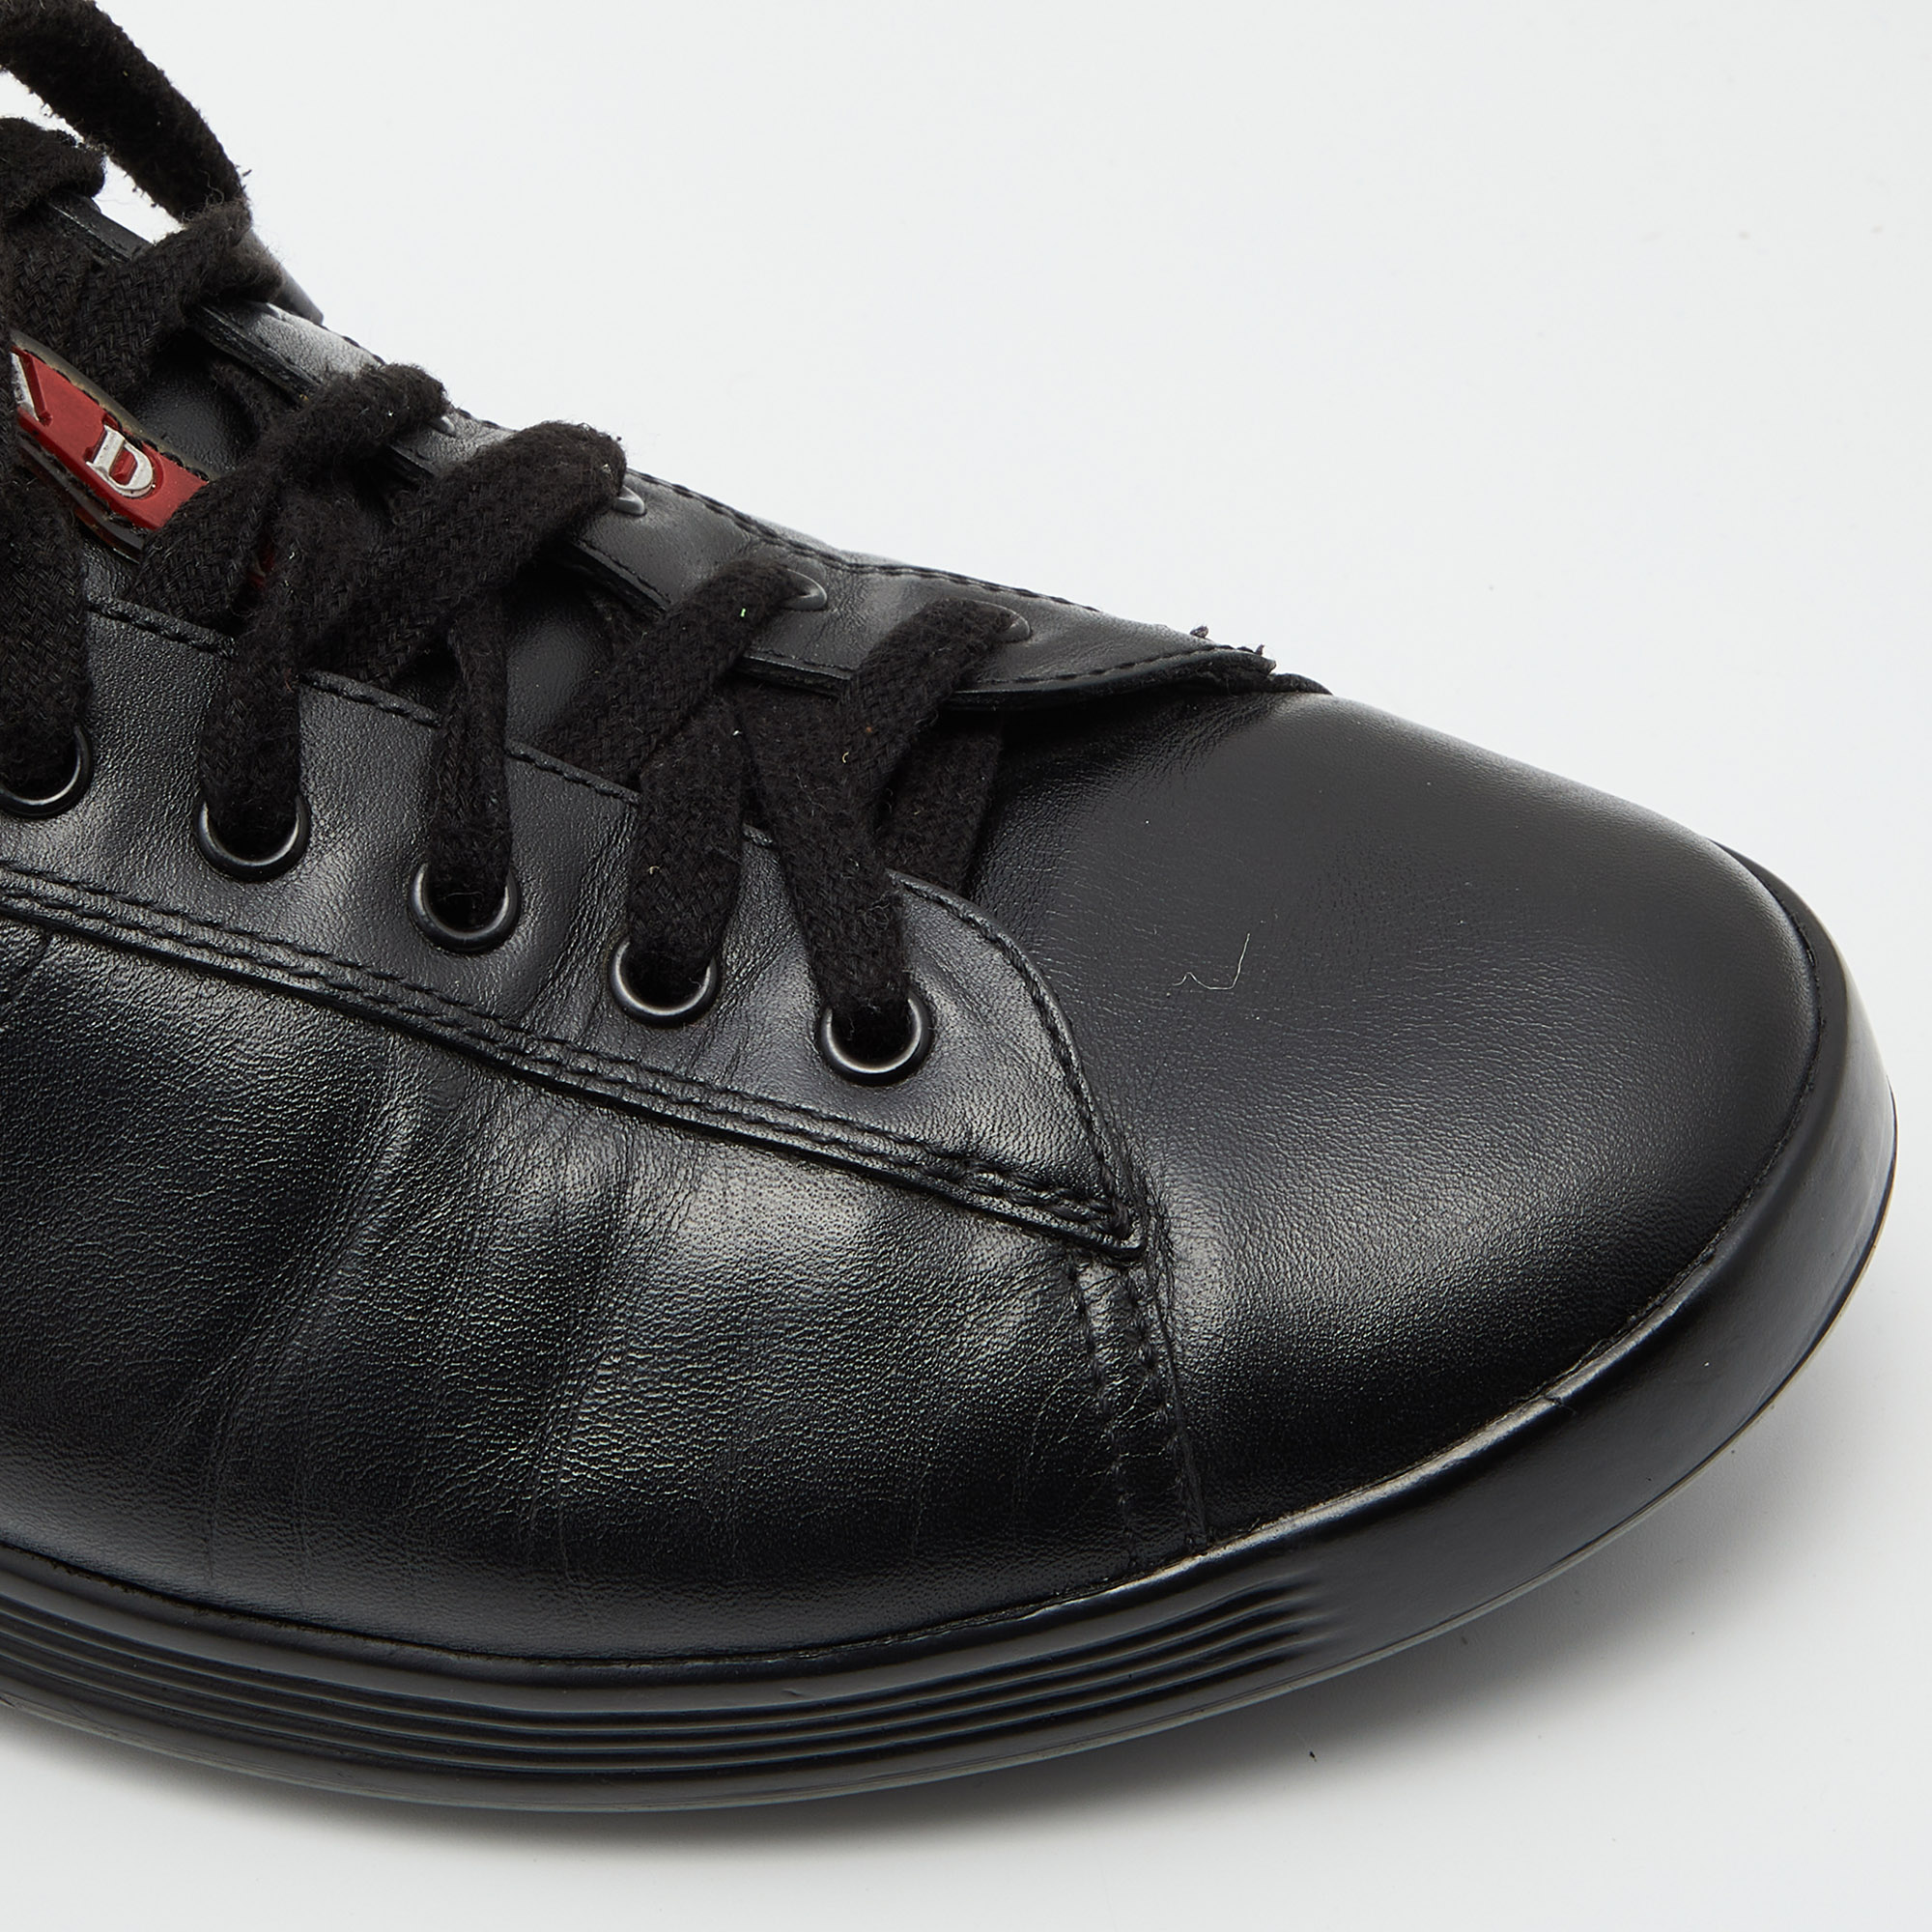 Prada Sport Black Leather Low Top Sneakers Size 43.5